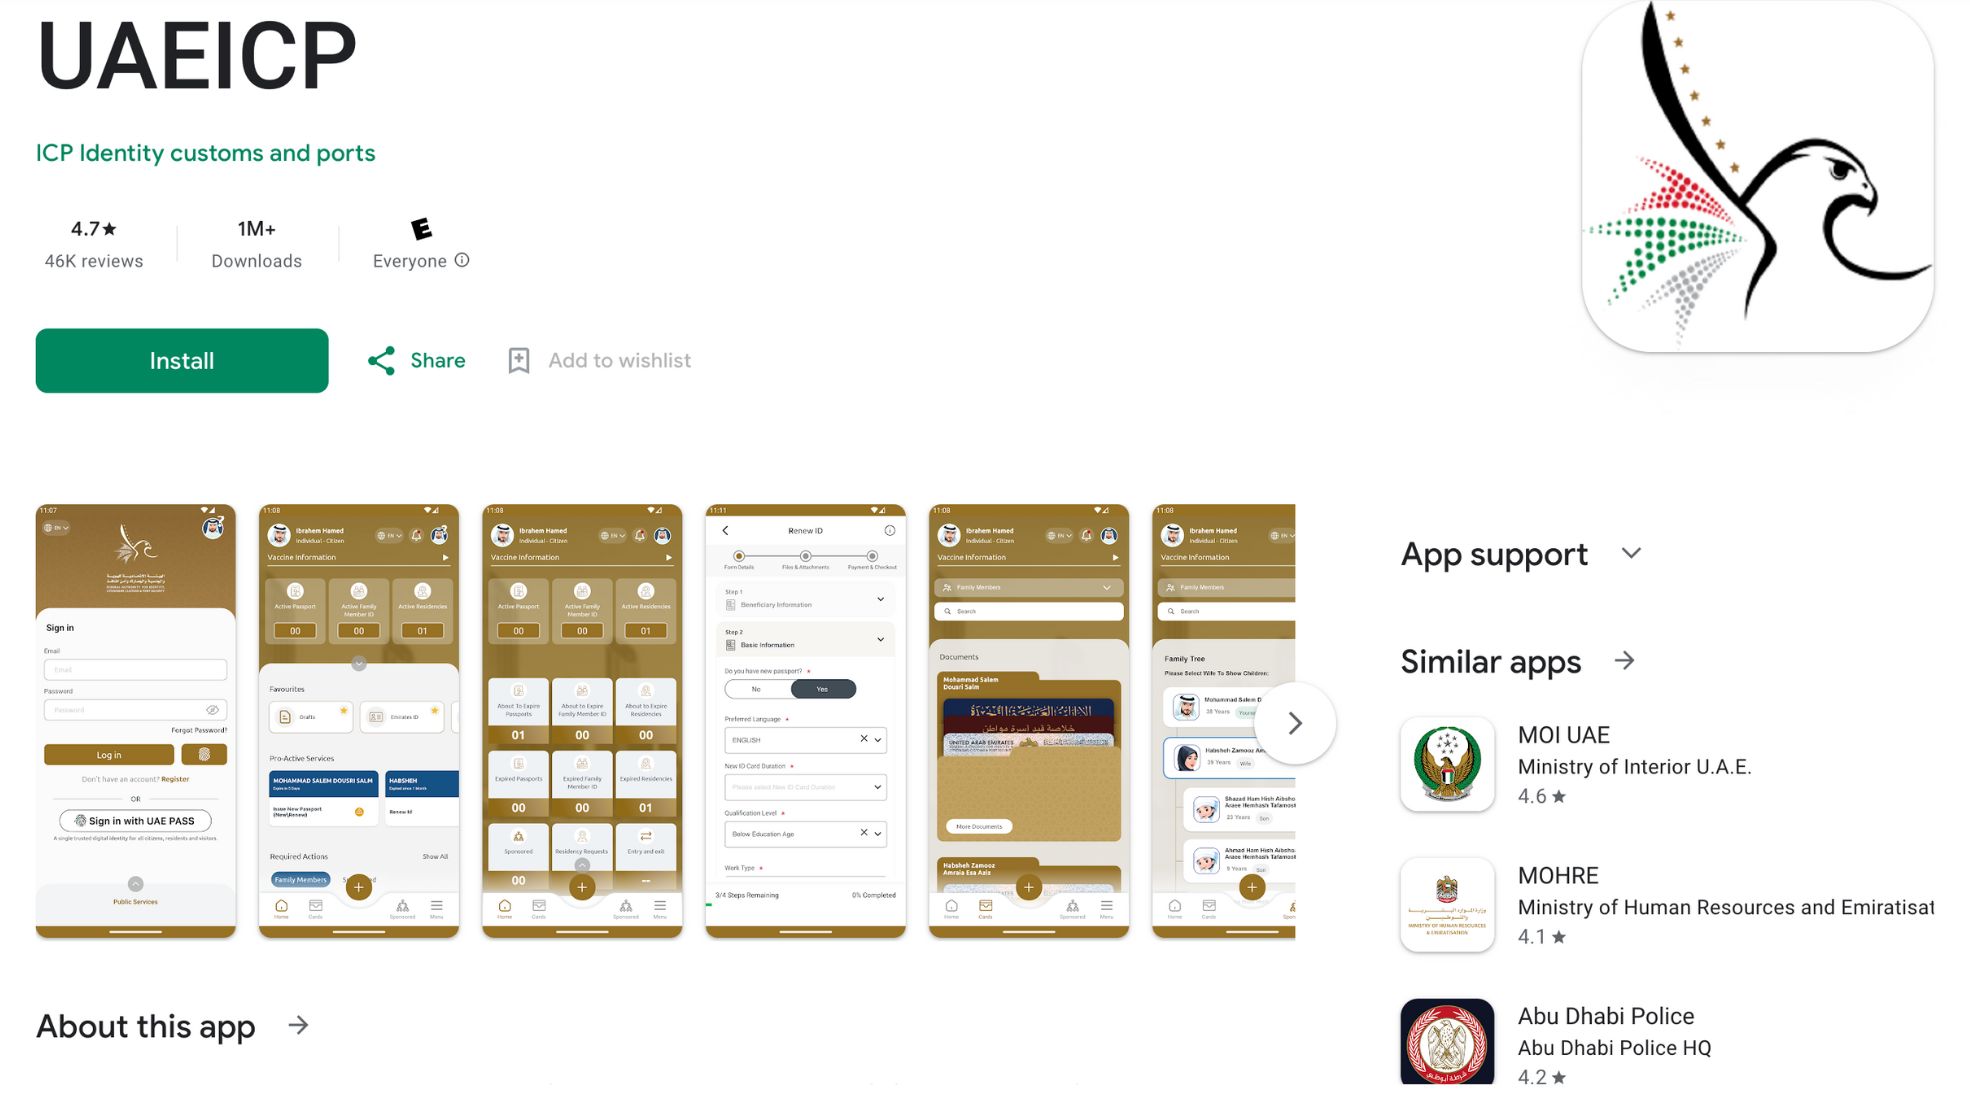 UAEICP App Information